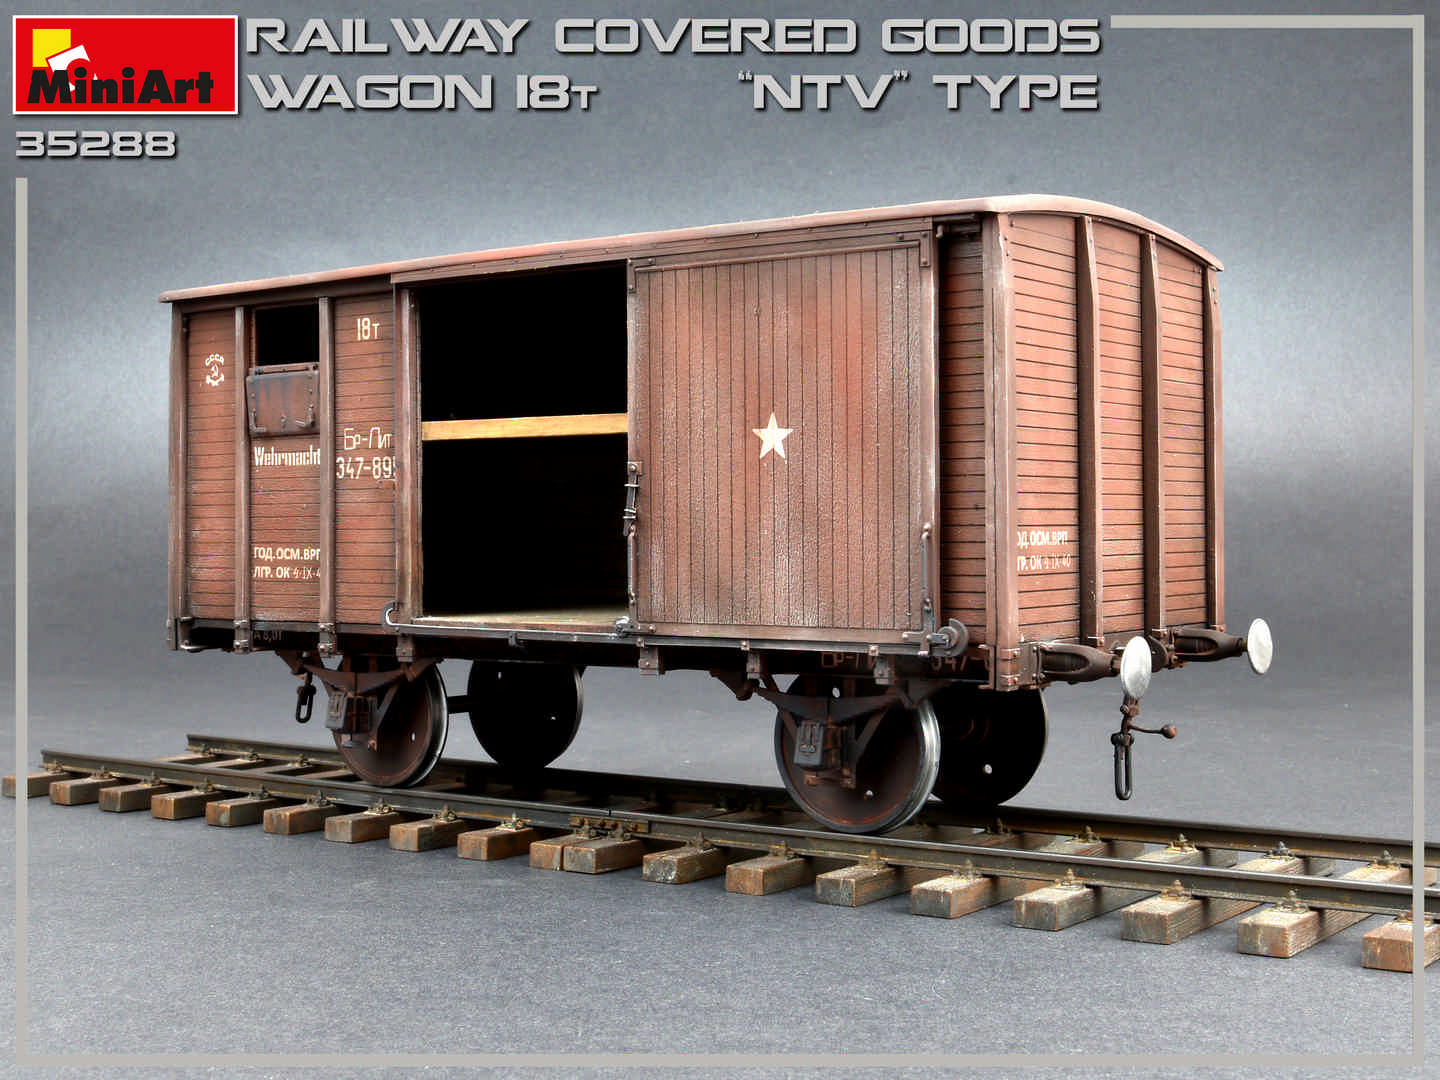 MiniArt 35288 RAILWAY COVERED GOODS WAGON 18t “NTV” TYPE 1/35 NEW Model kit 